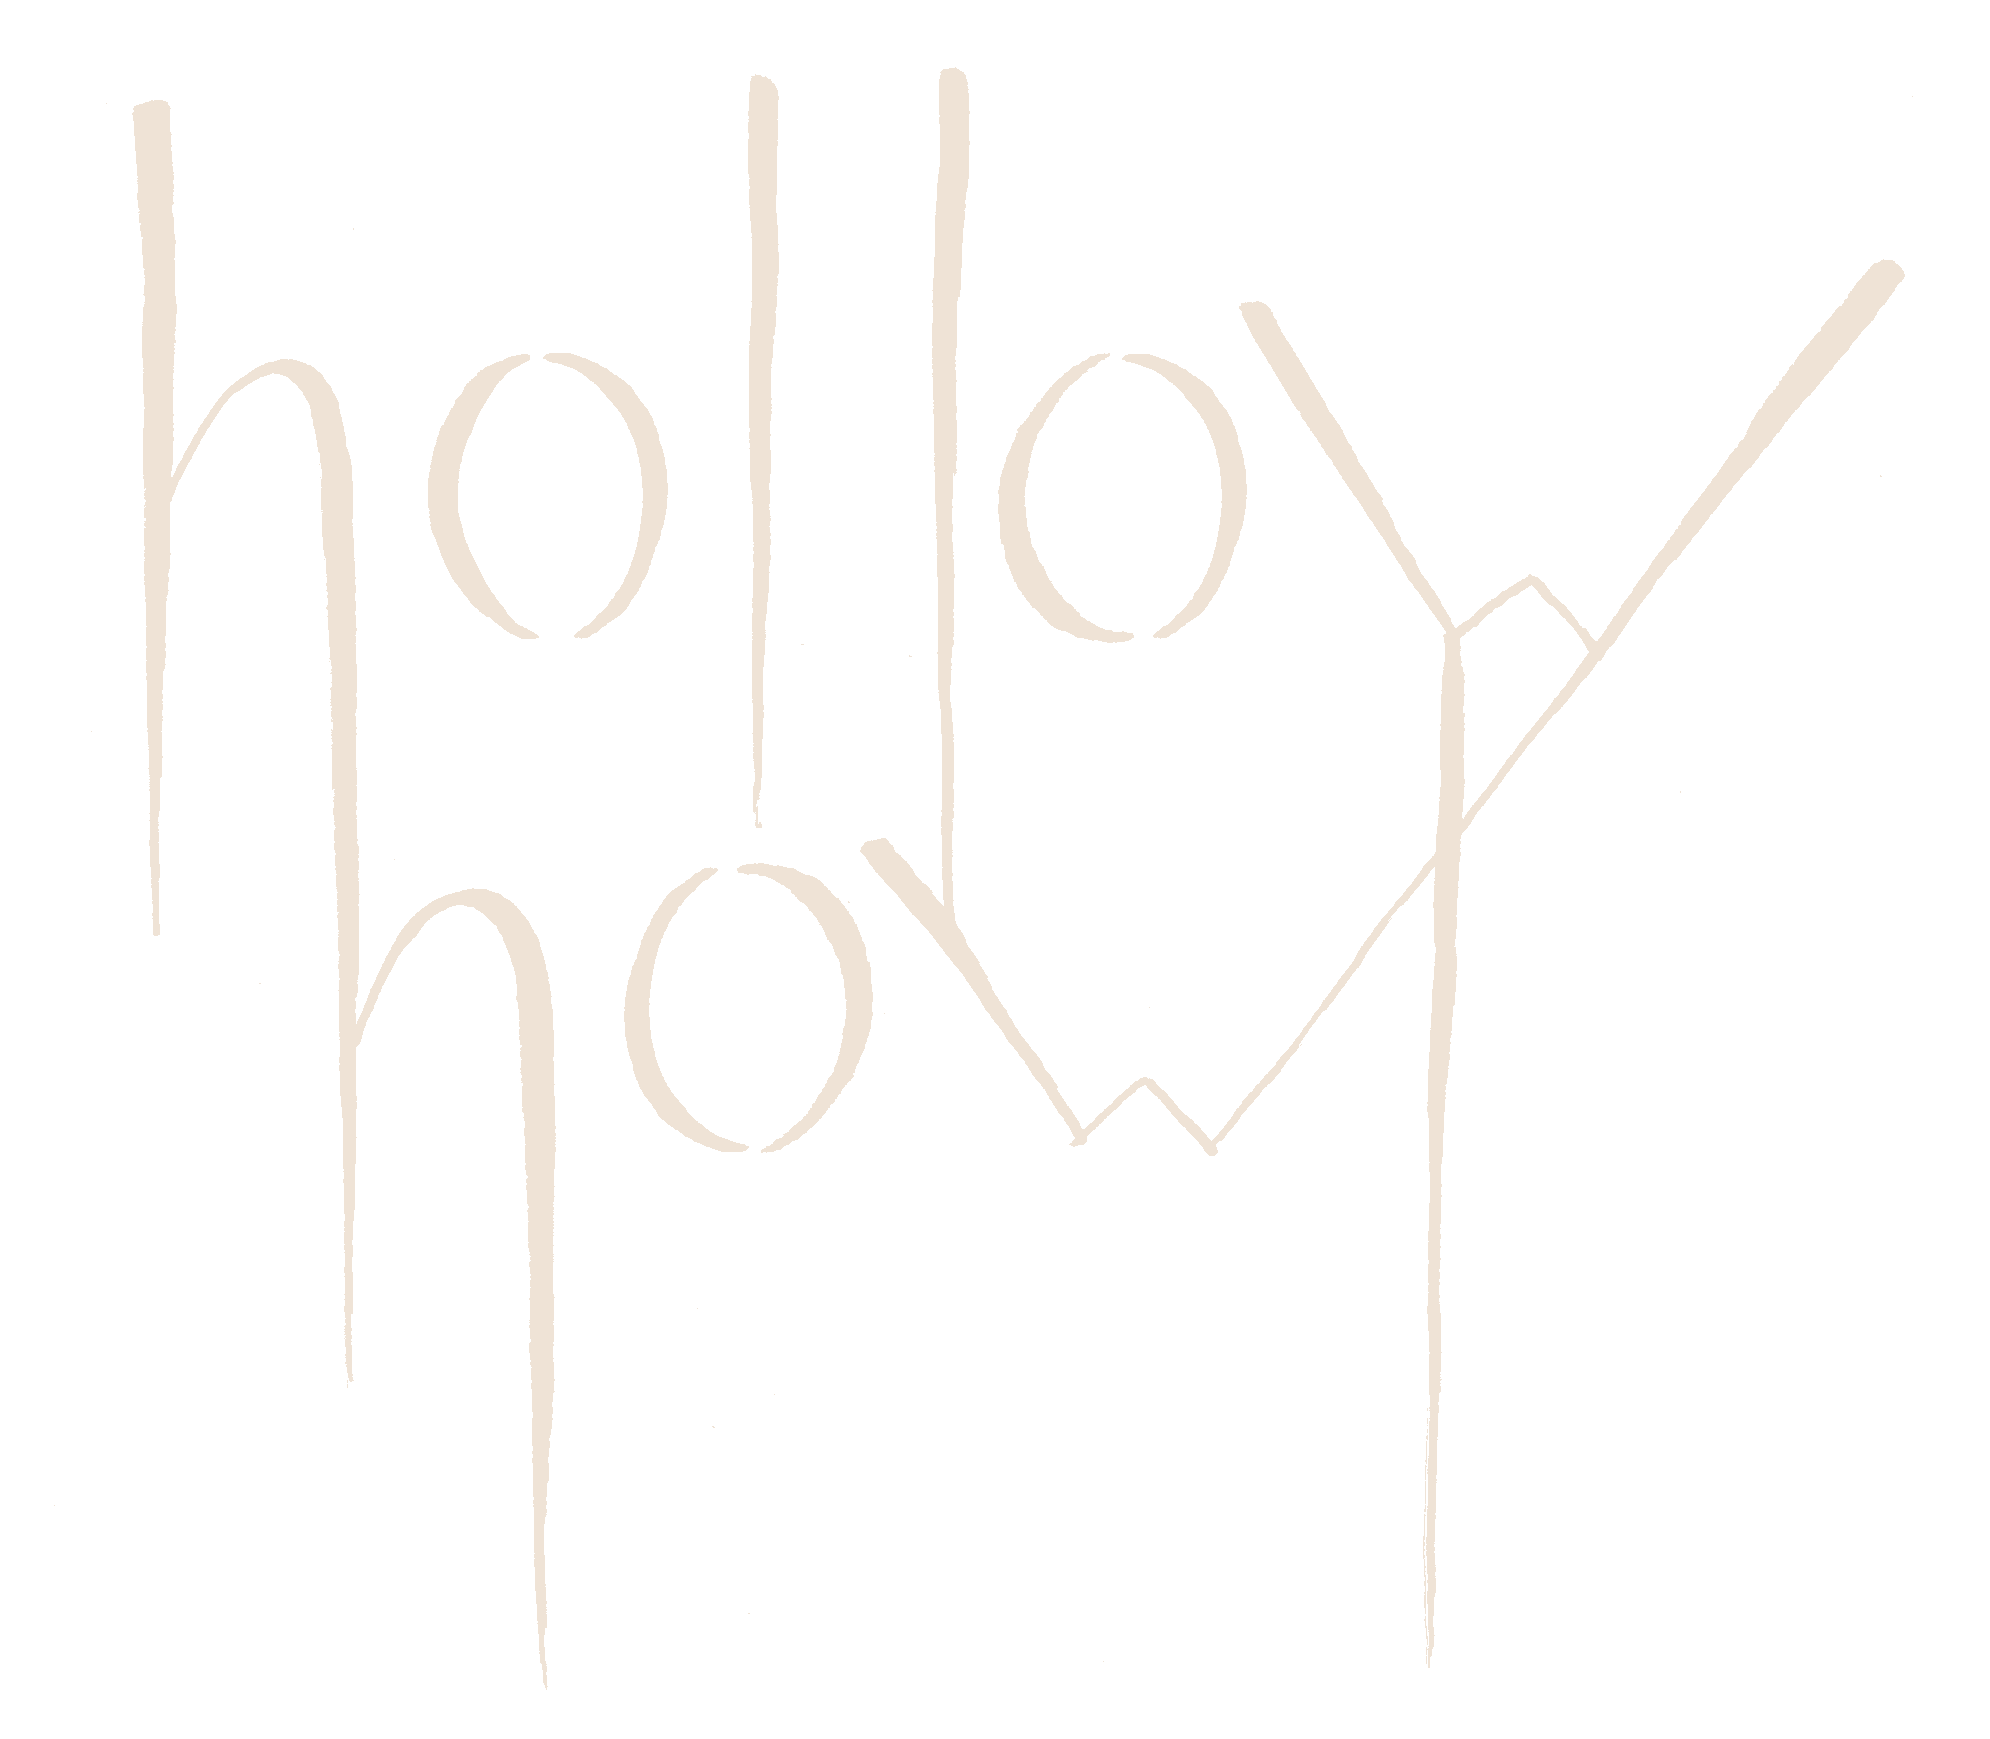 Hollow Howl